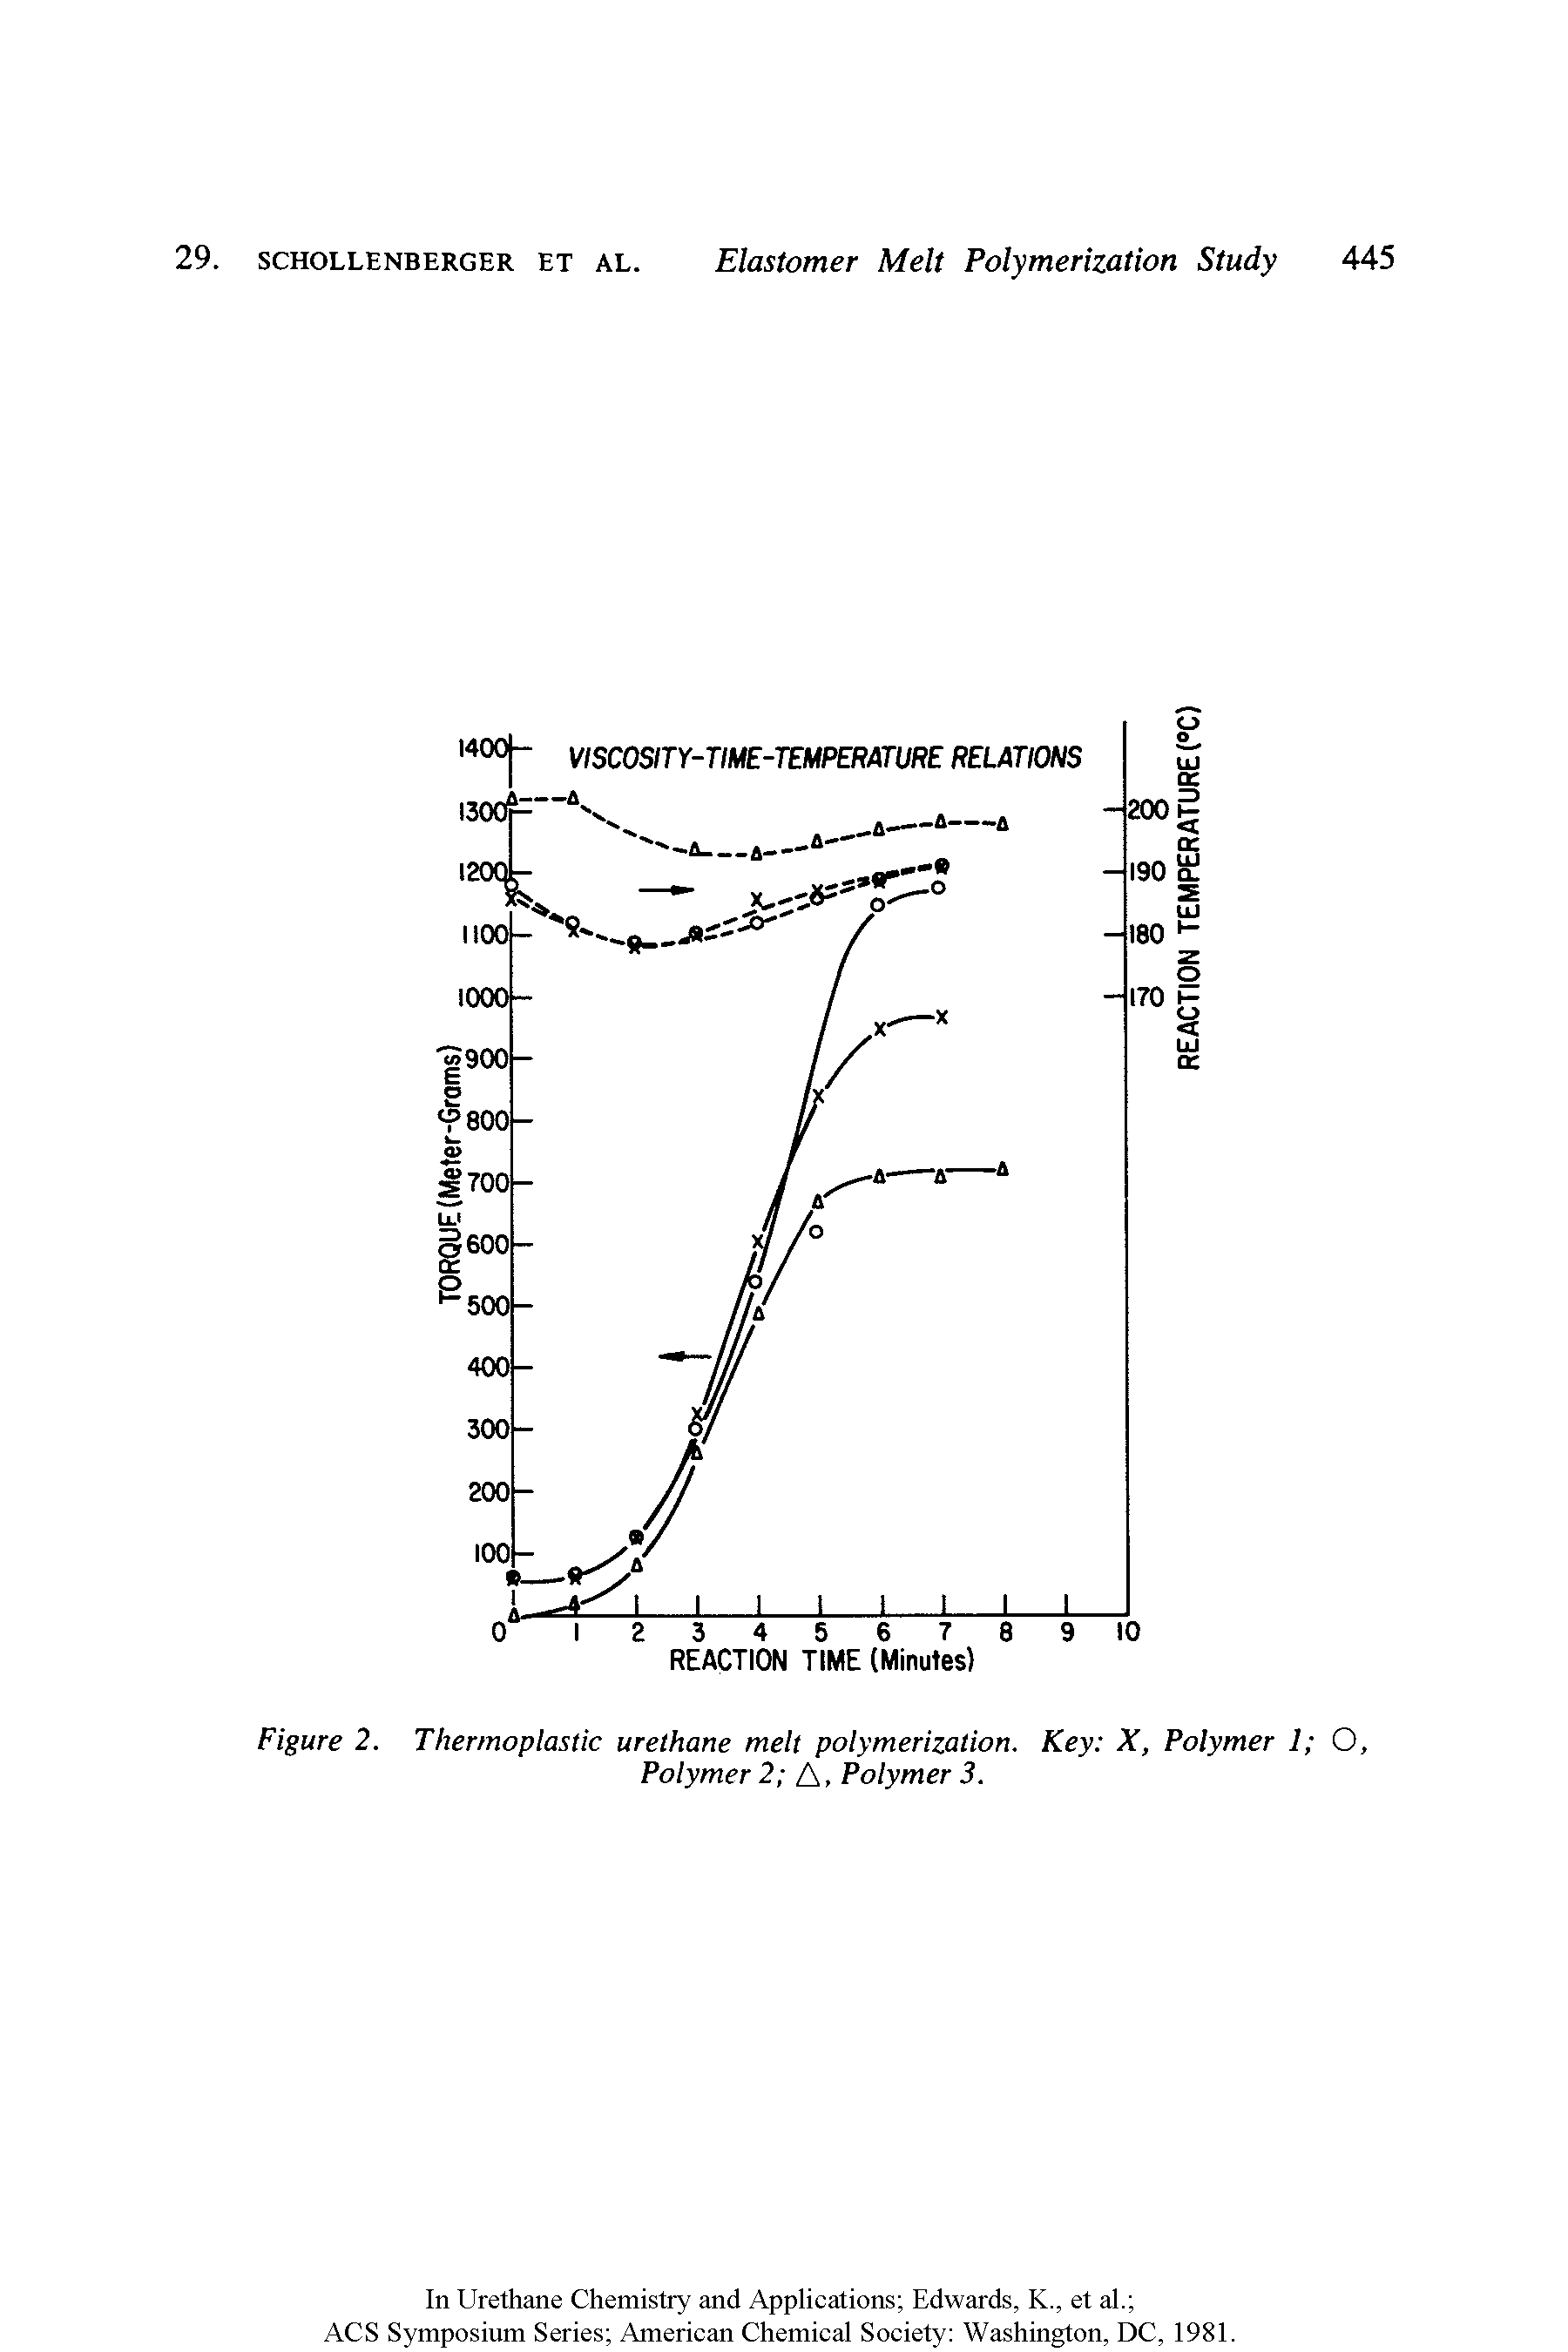 Figure 2. Thermoplastic urethane melt polymerization. Key X, Polymer 1 O, Polymer 2 A, Polymer 3.